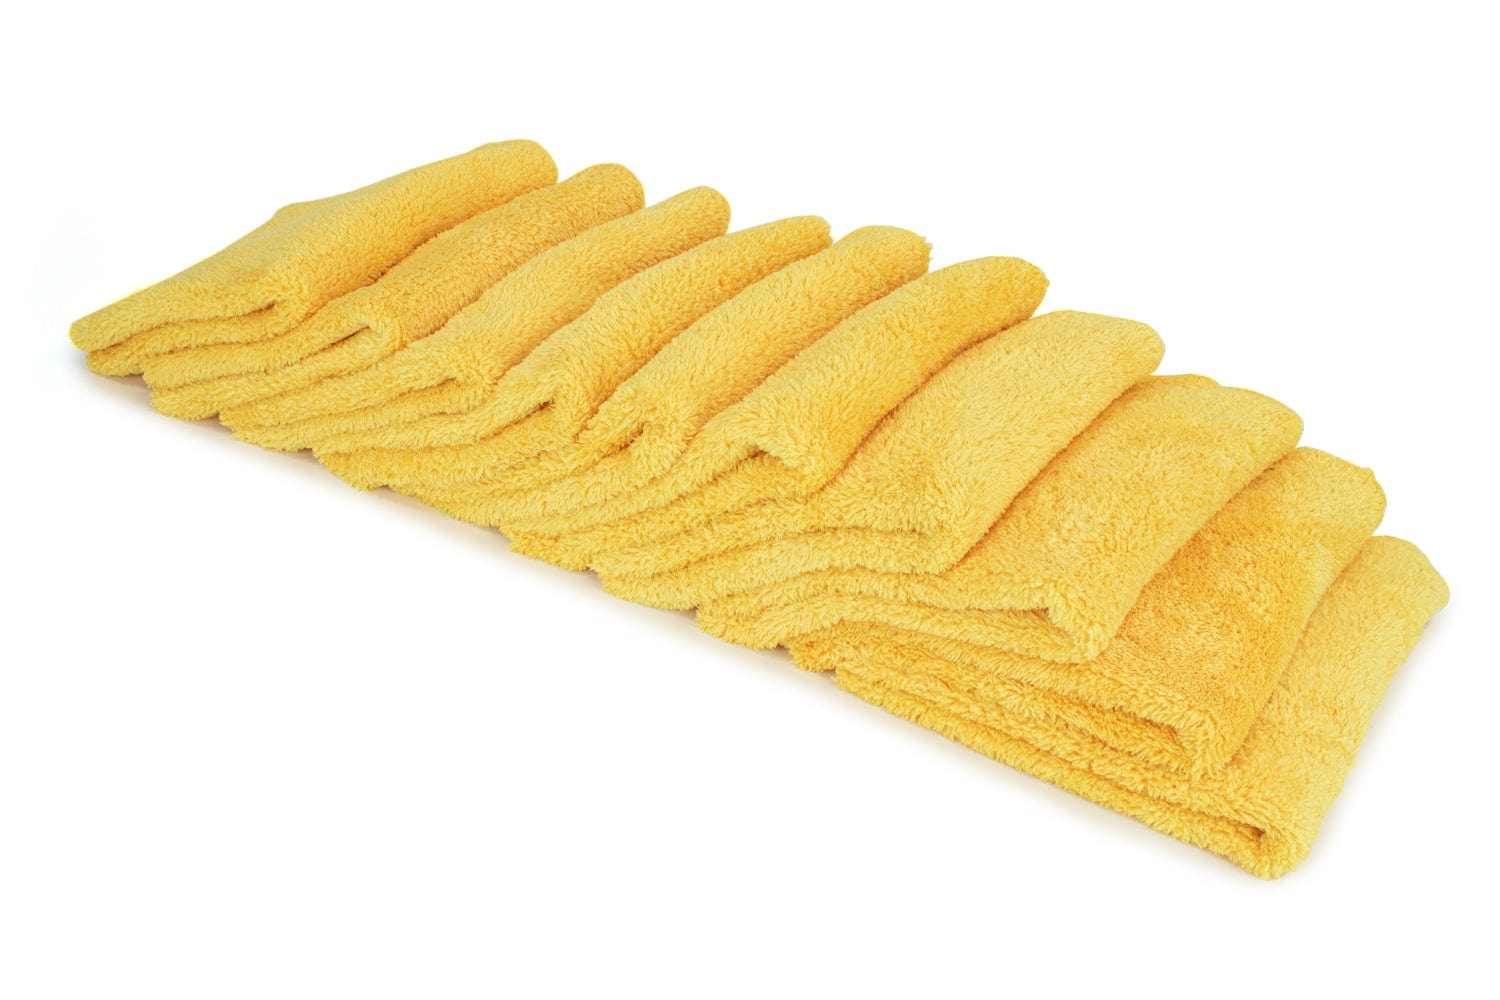 Autofiber Towel [Korean Plush 350] Edgeless Detailing Towels (16 in. x 16 in. 350 gsm) 6 pack